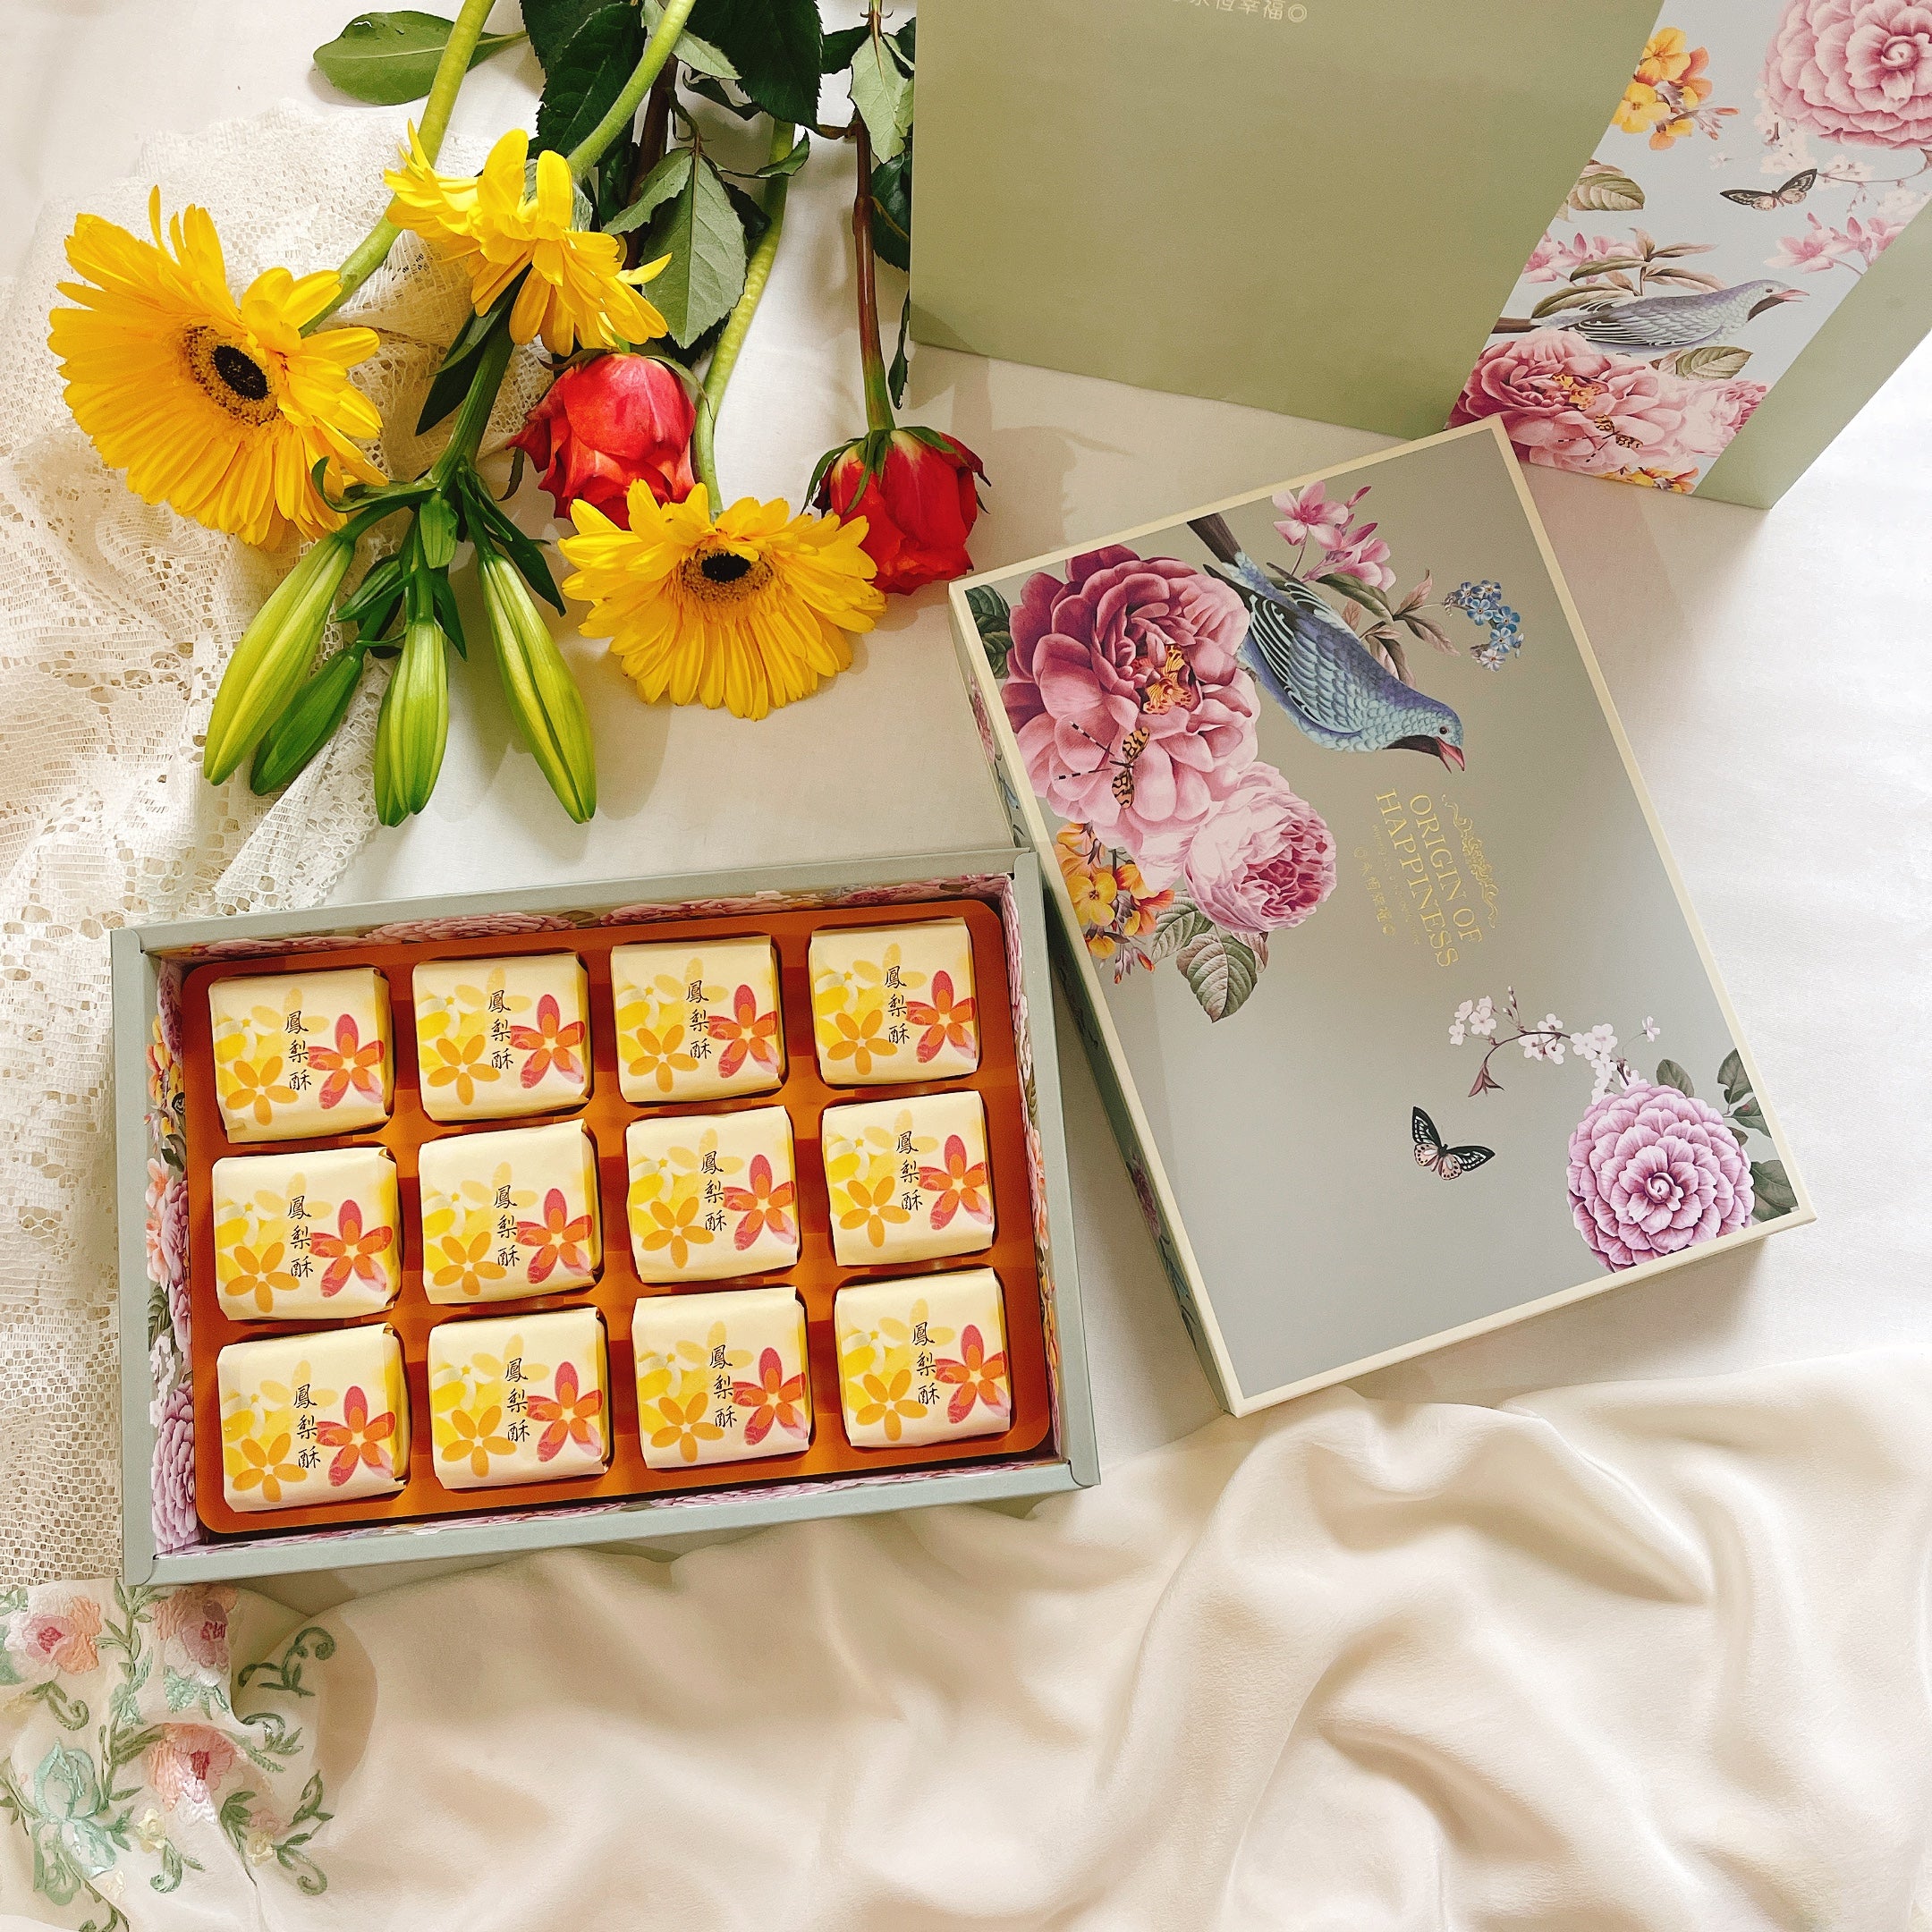 [B6]鳳梨酥12入禮盒裝Pineapple Cakes 12 in Gift Box